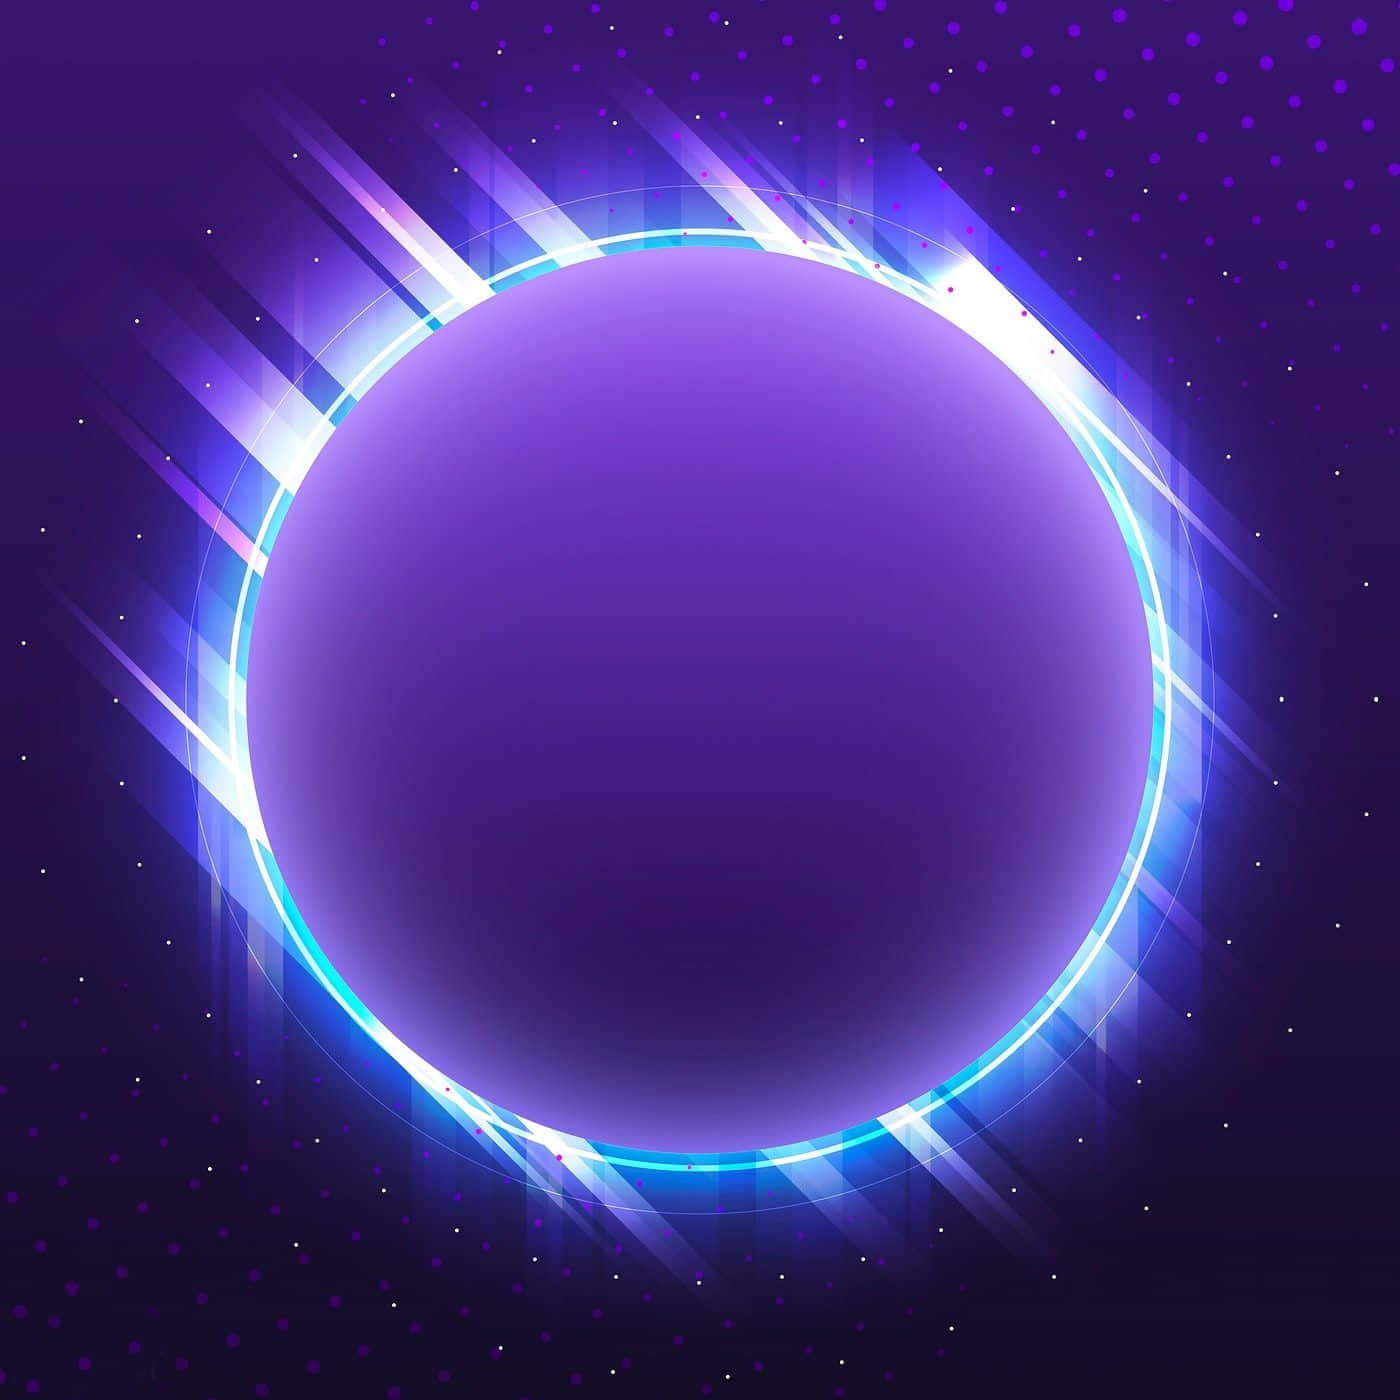 A Circular Glowing Circle On A Purple Background